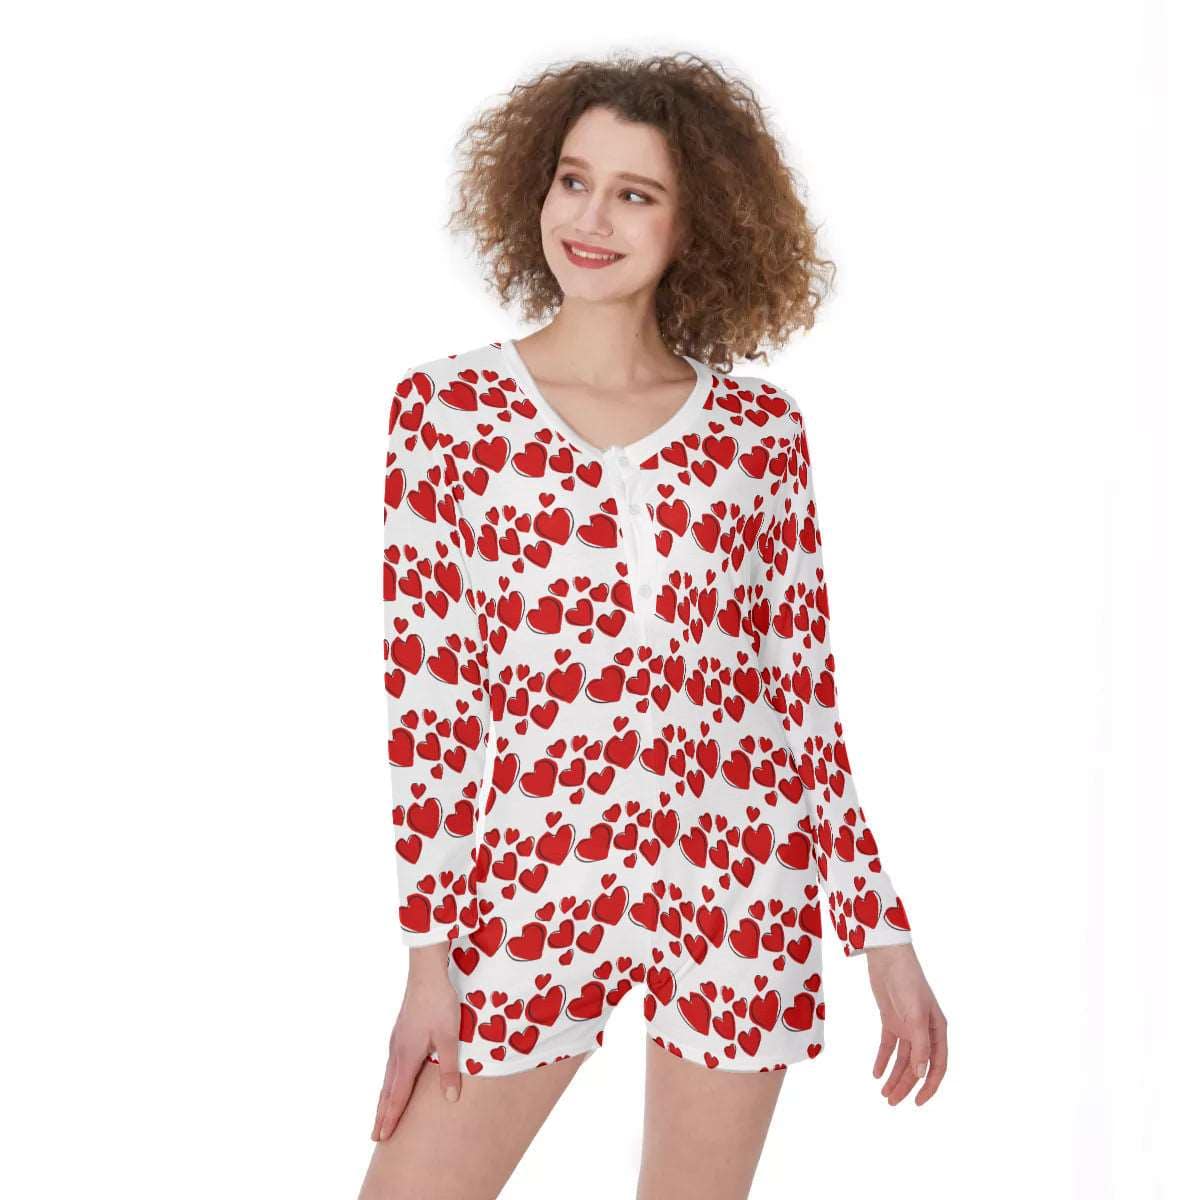 Dancing Hearts One-Piece Women's Jumper Pajama Sleepwear Yoycol 2XL  